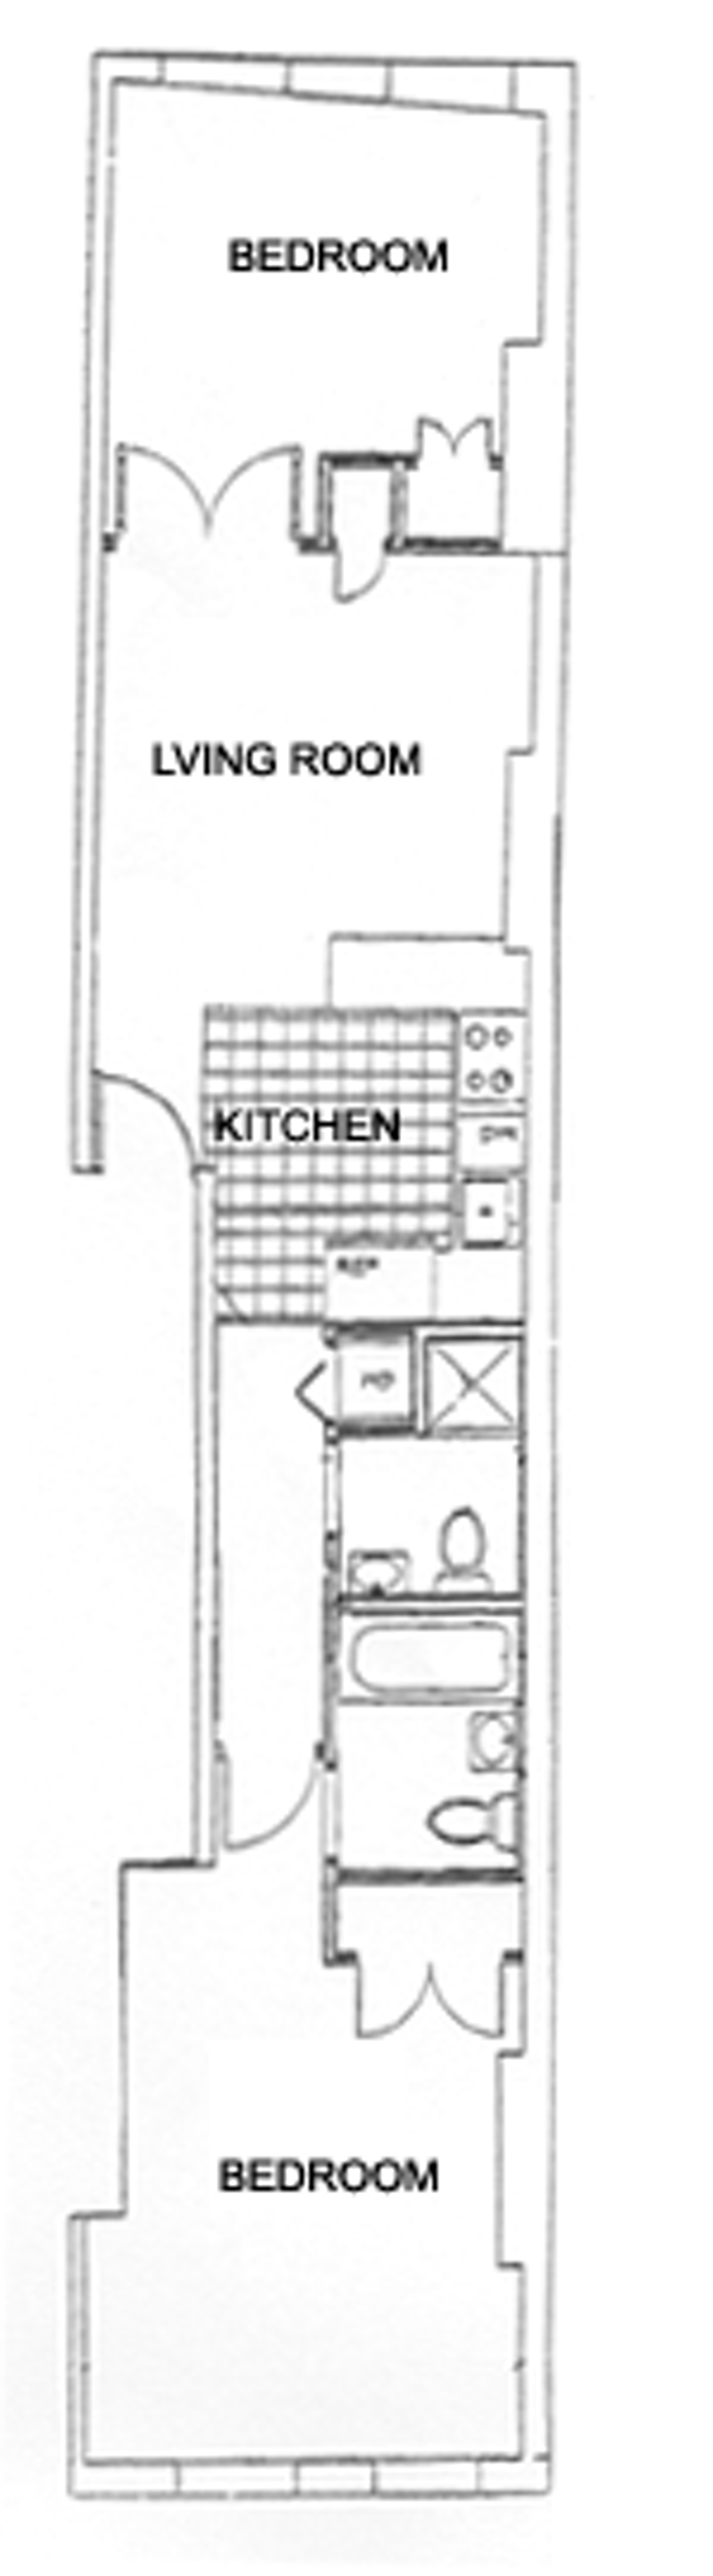 Floorplan for 51 East Houston Street, 3A